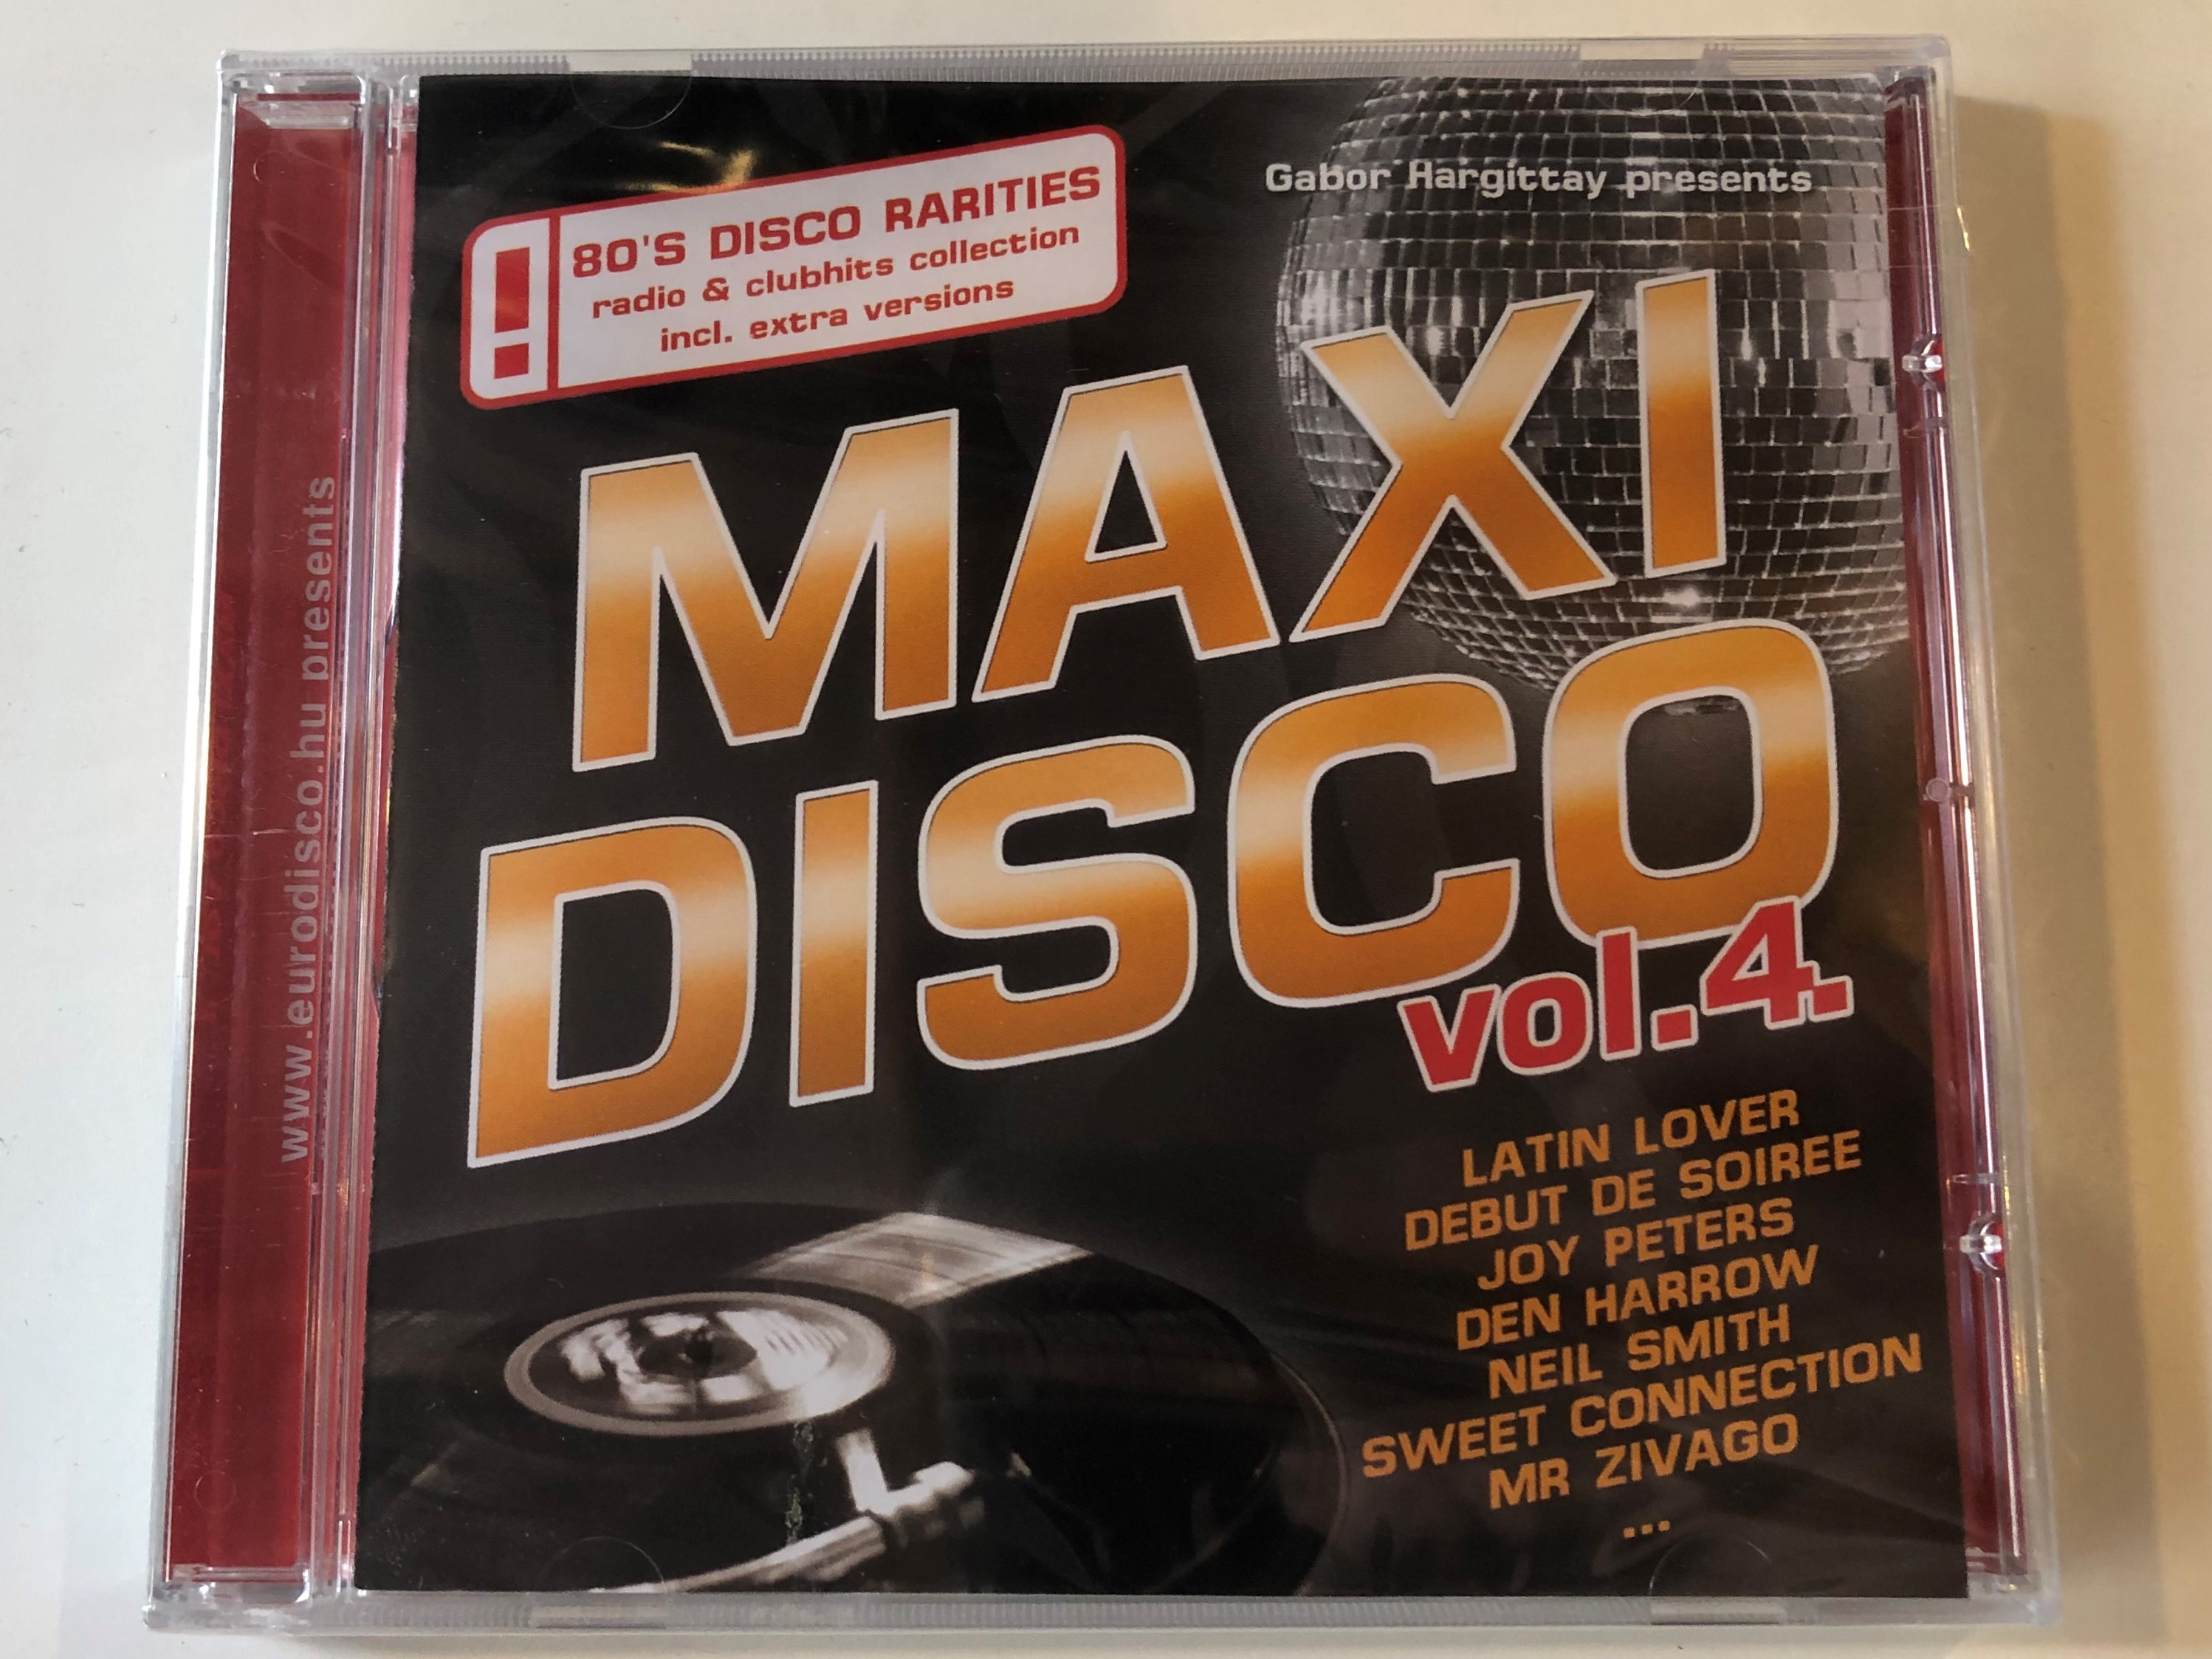 gabor-hargittay-presents-maxi-disco-vol.-4.-latin-lover-debut-de-soiree-joy-peters-den-harrow-neil-smith-sweet-connection-mr-zivago...-80-s-disco-rarities-radio-clubhits-collection-incl-1-.jpg